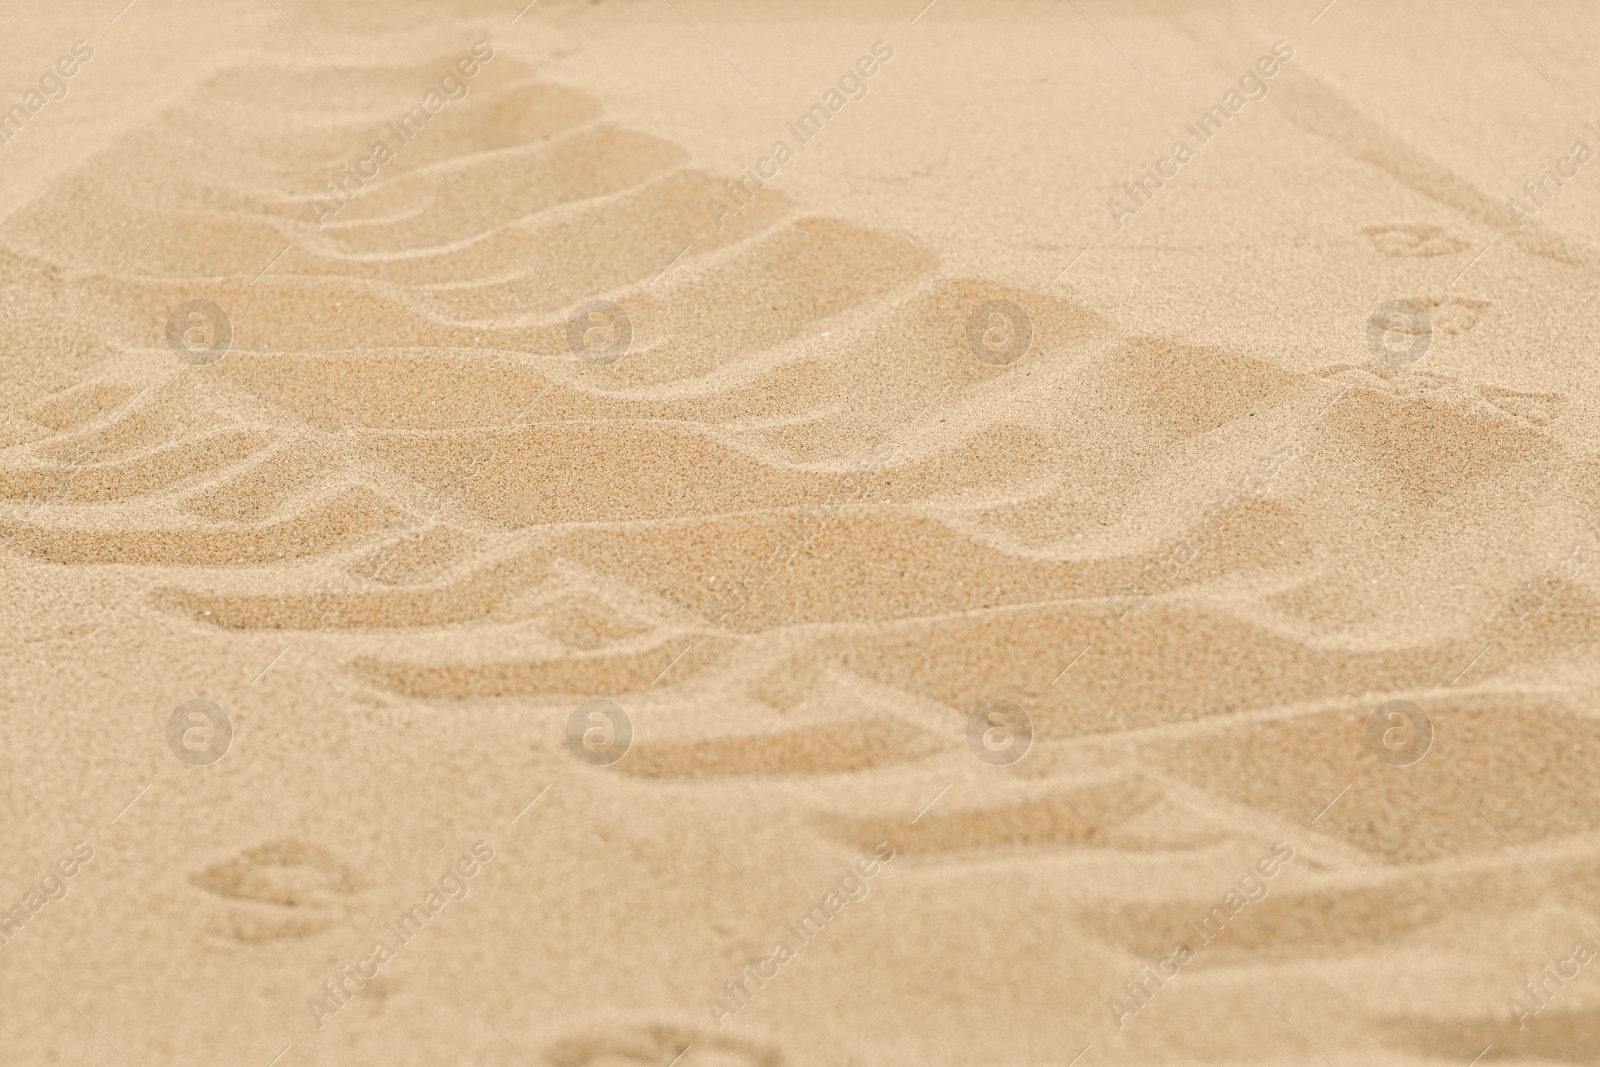 Photo of Car tire tracks on beach sand, closeup